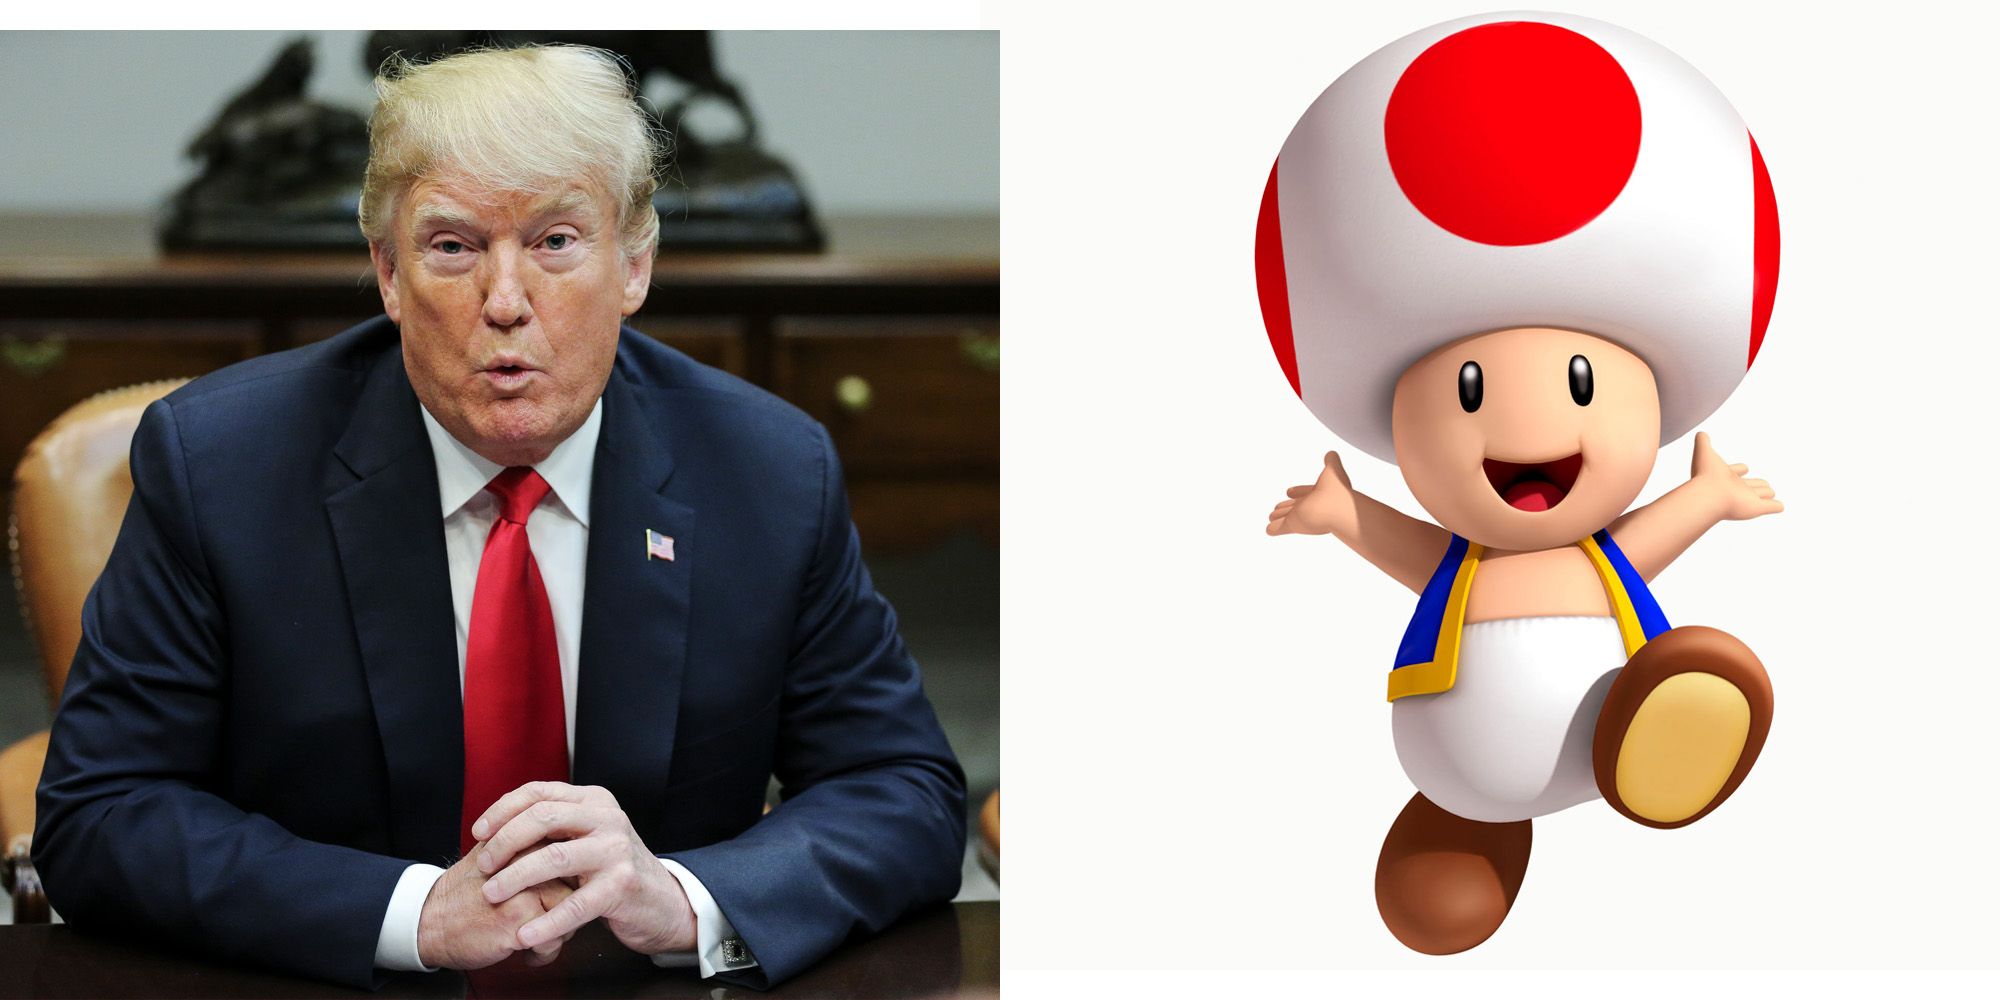 Big Mushroom Cock Gallery - Stormy Daniels Says Donald Trump's Penis Looks Like a Mushroom In New Book